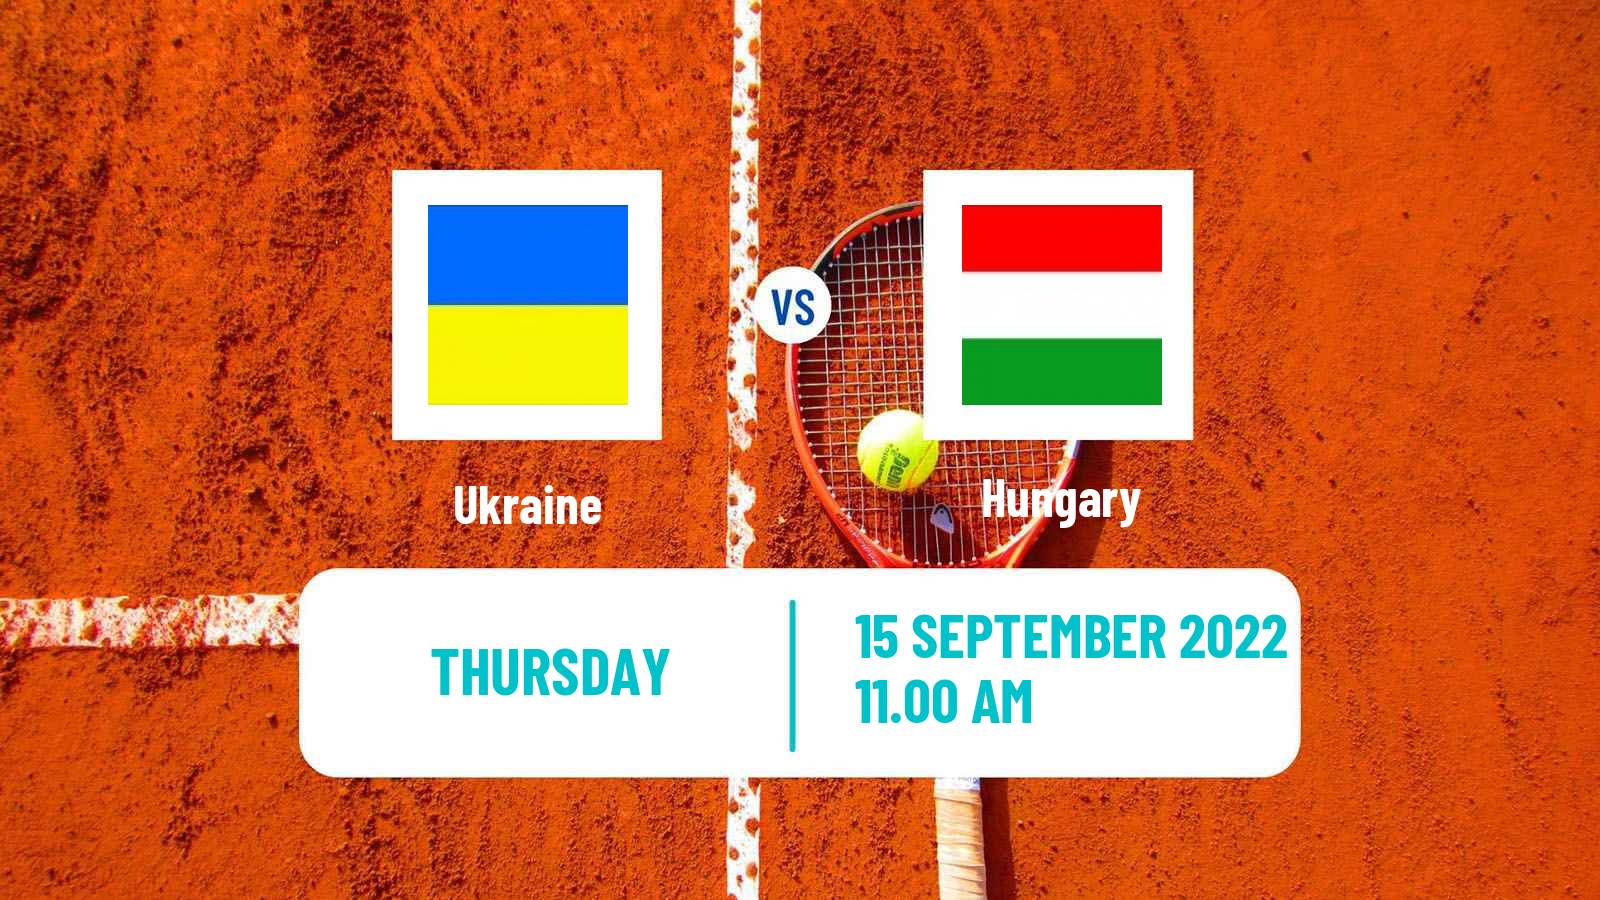 Tennis Davis Cup World Group I Teams Ukraine - Hungary